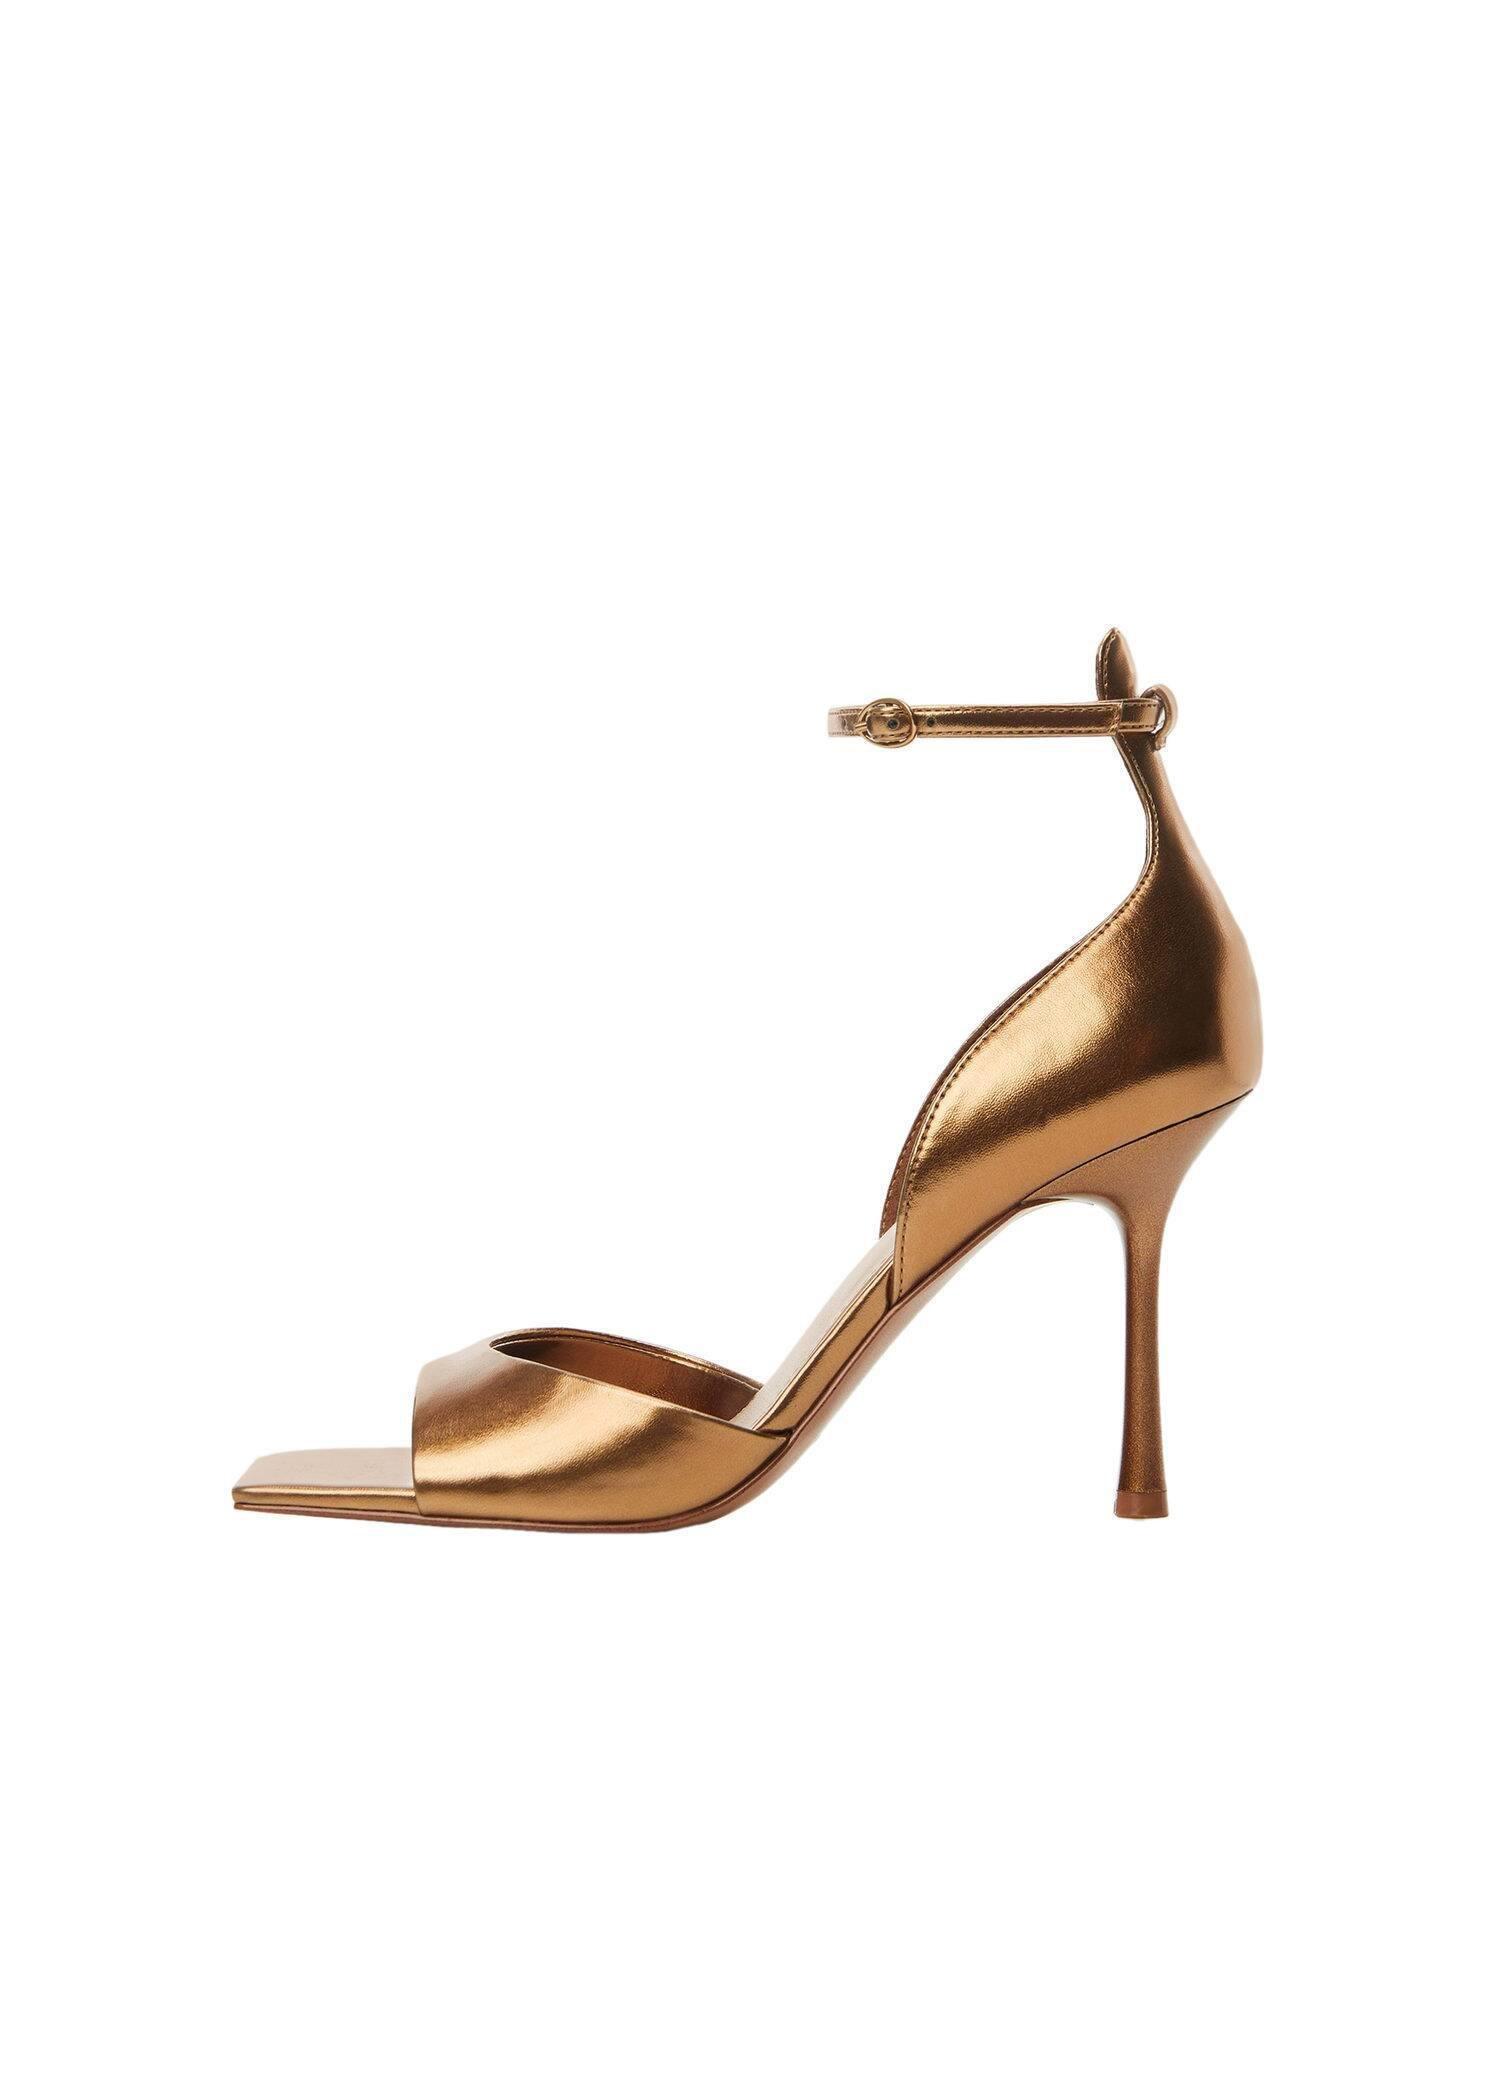 Audley HILARIA - Sandals - metallic gold/gold-coloured - Zalando.de